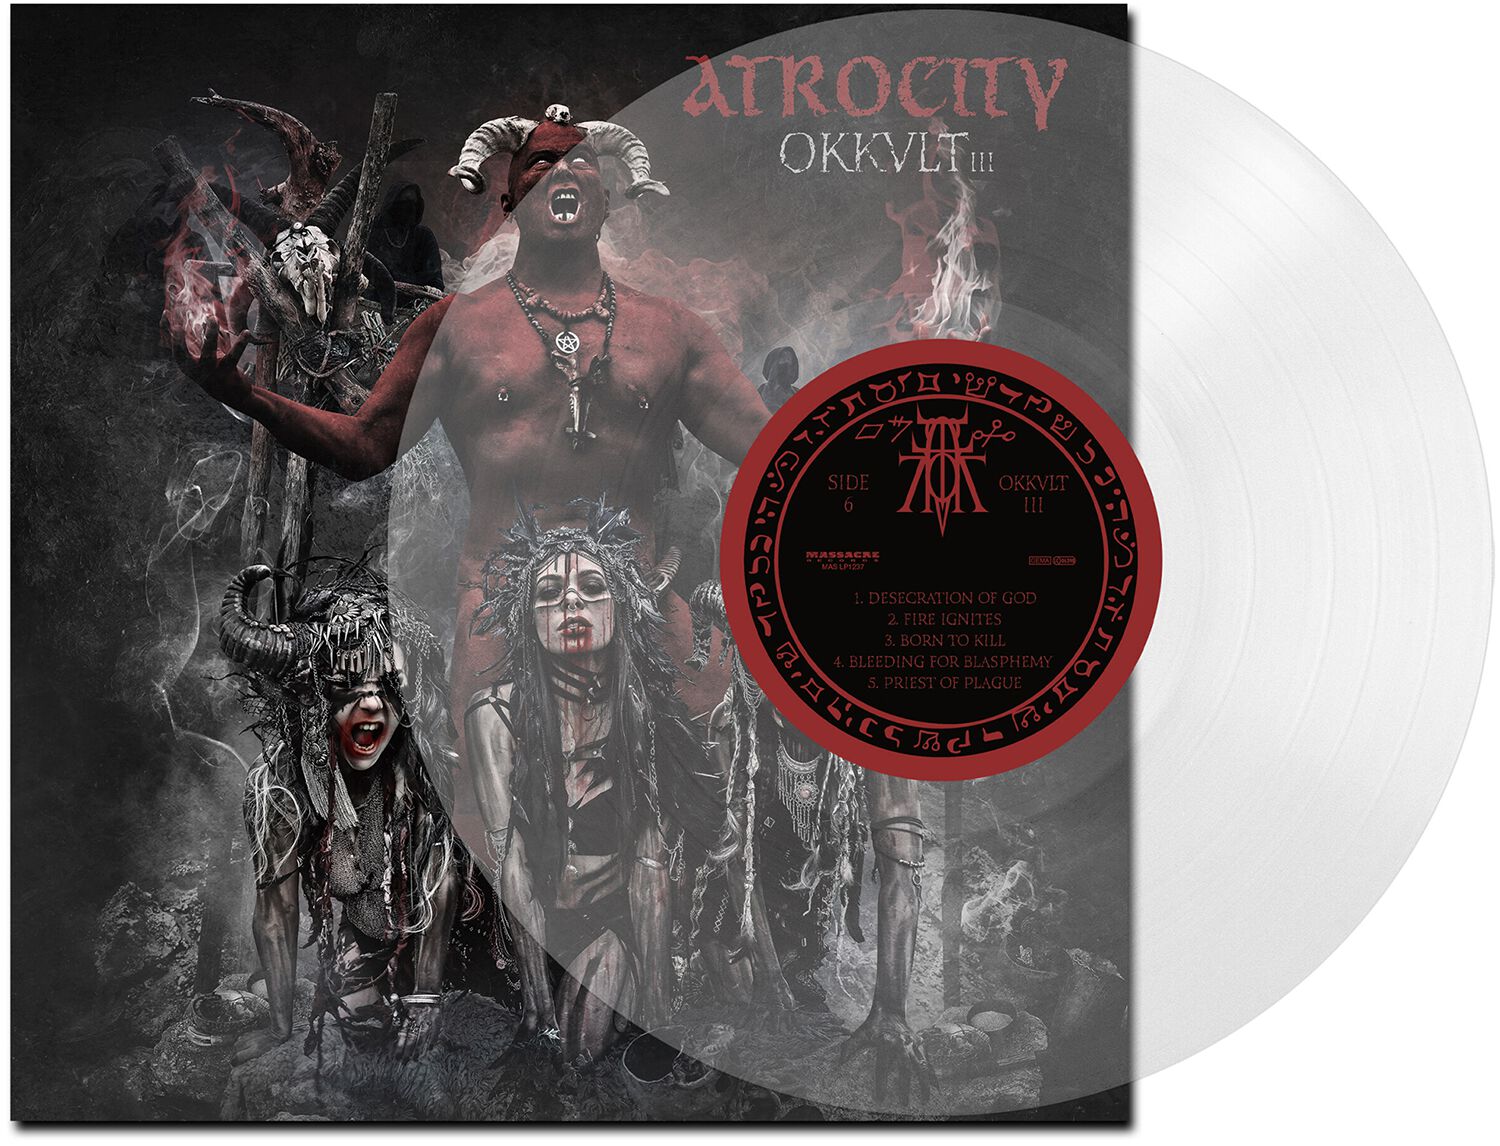 Atrocity Okkult III LP transparent